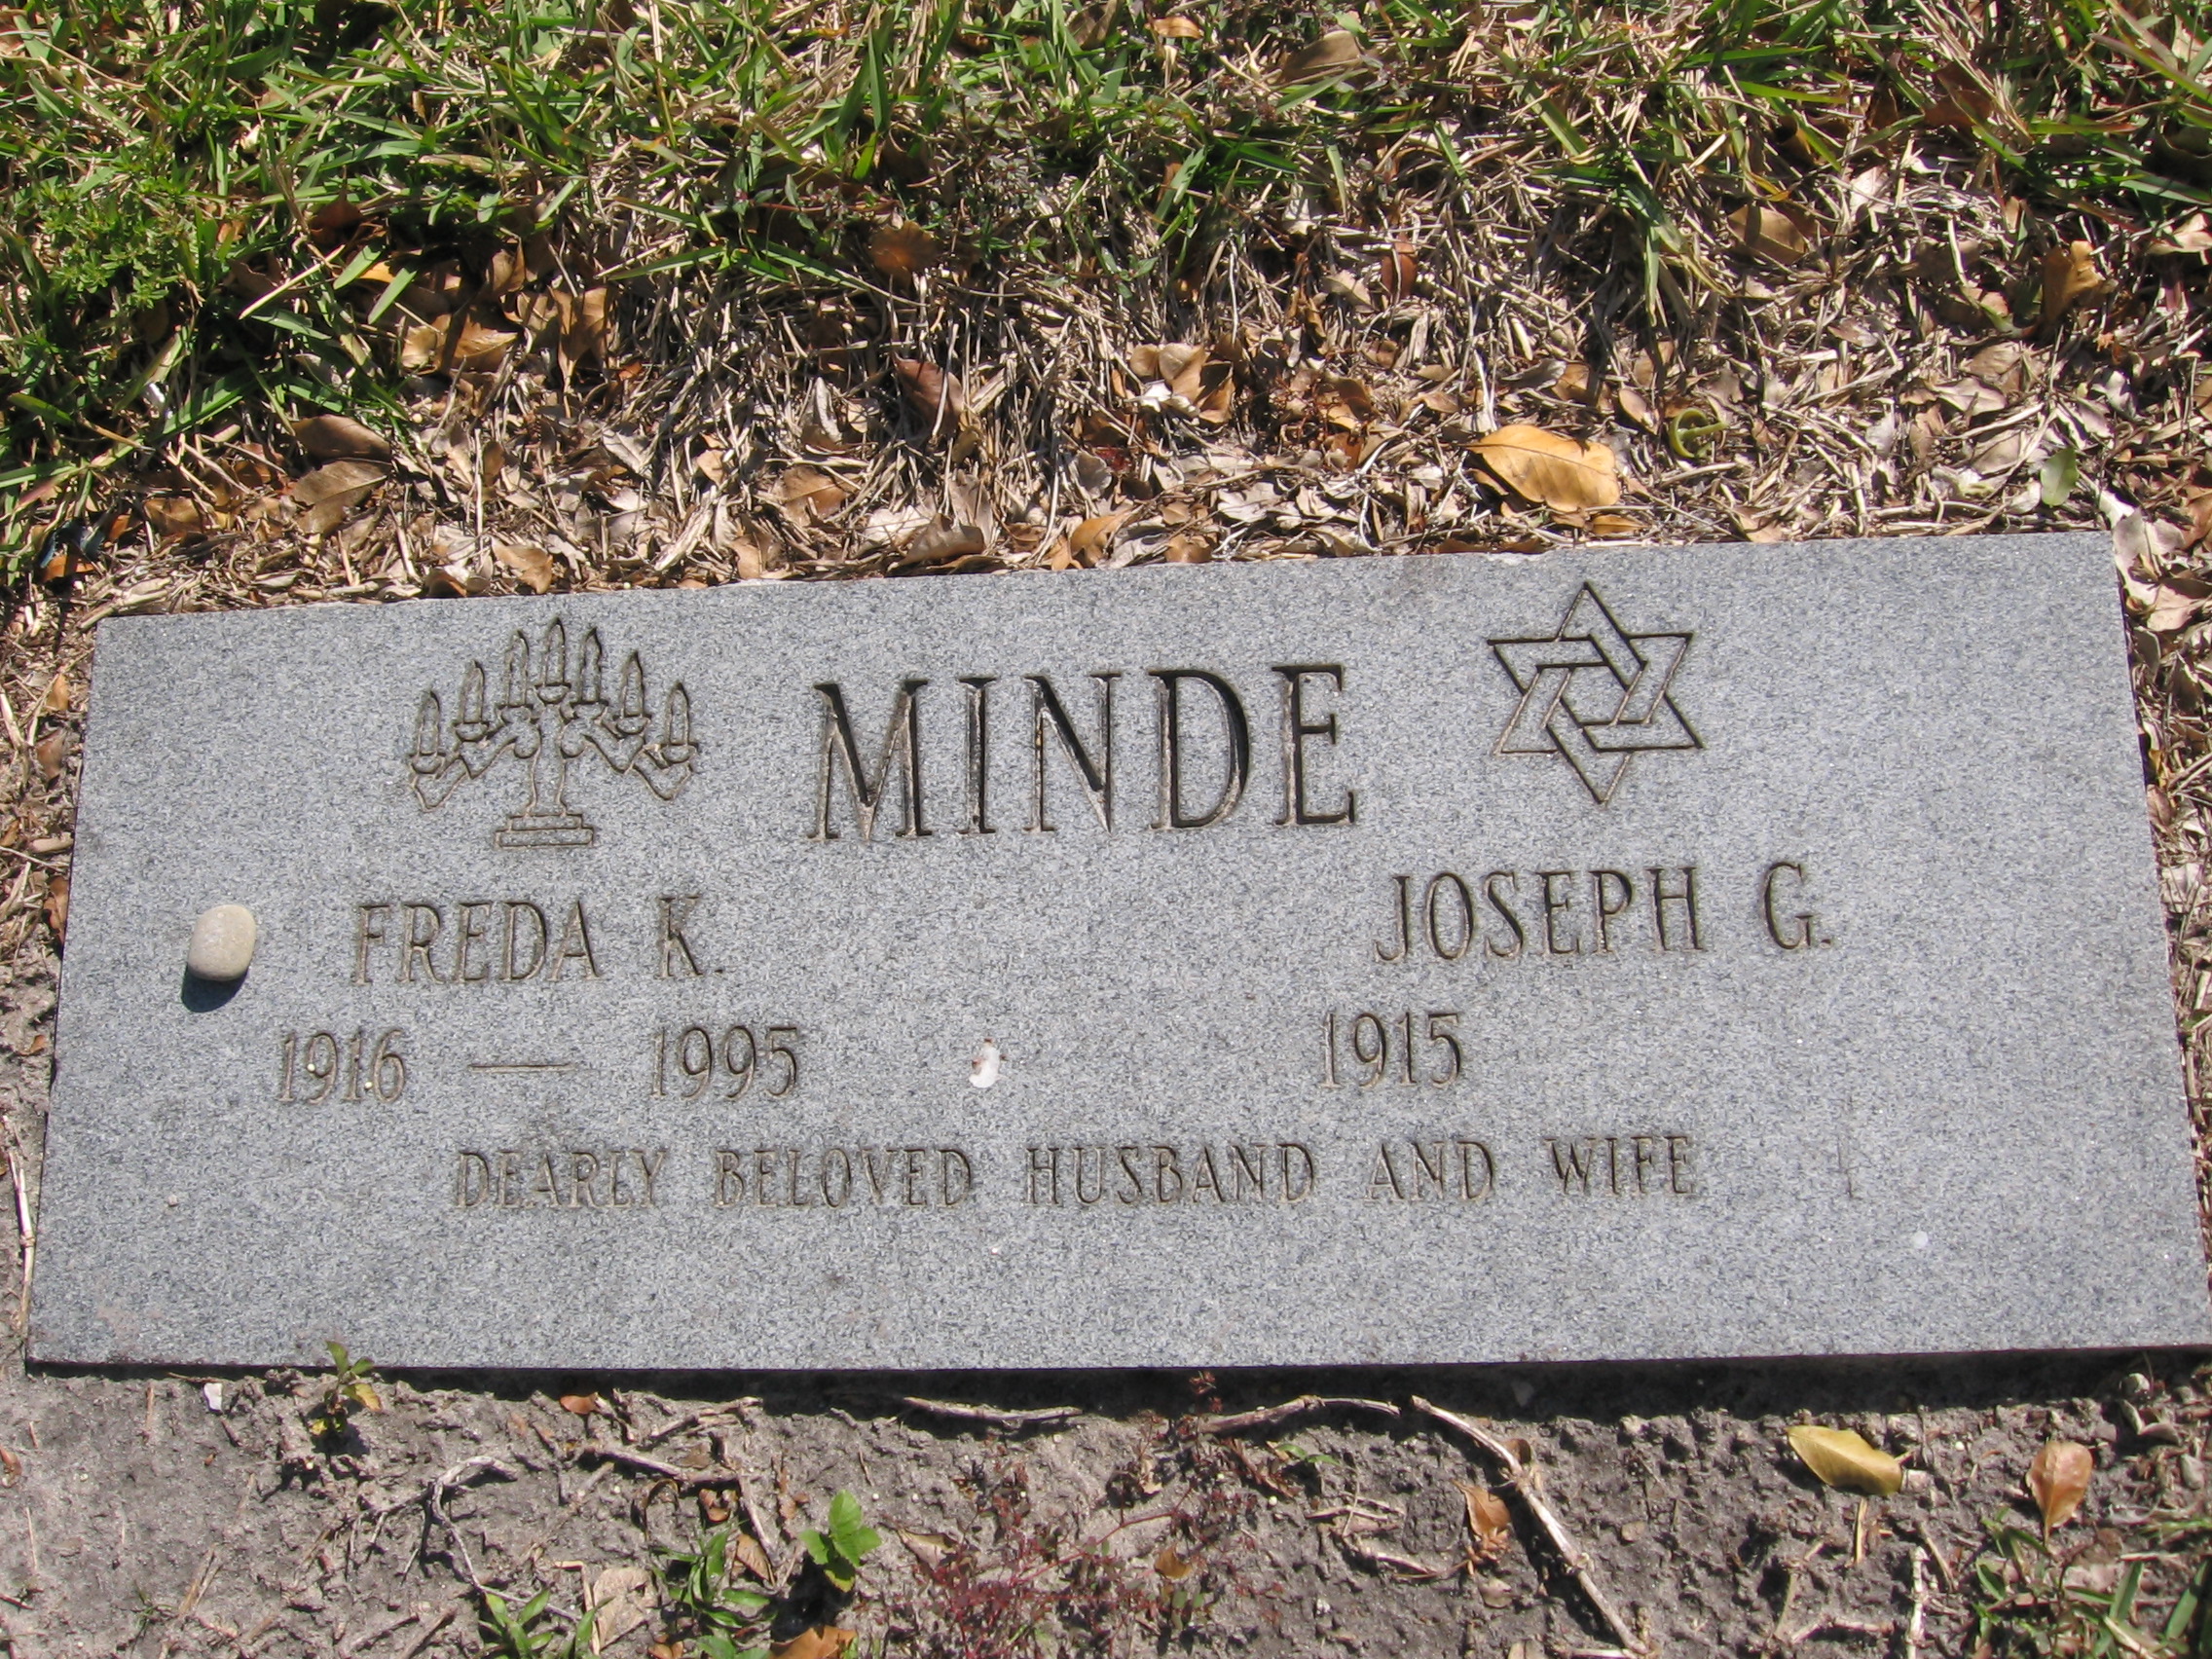 Joseph G Minde